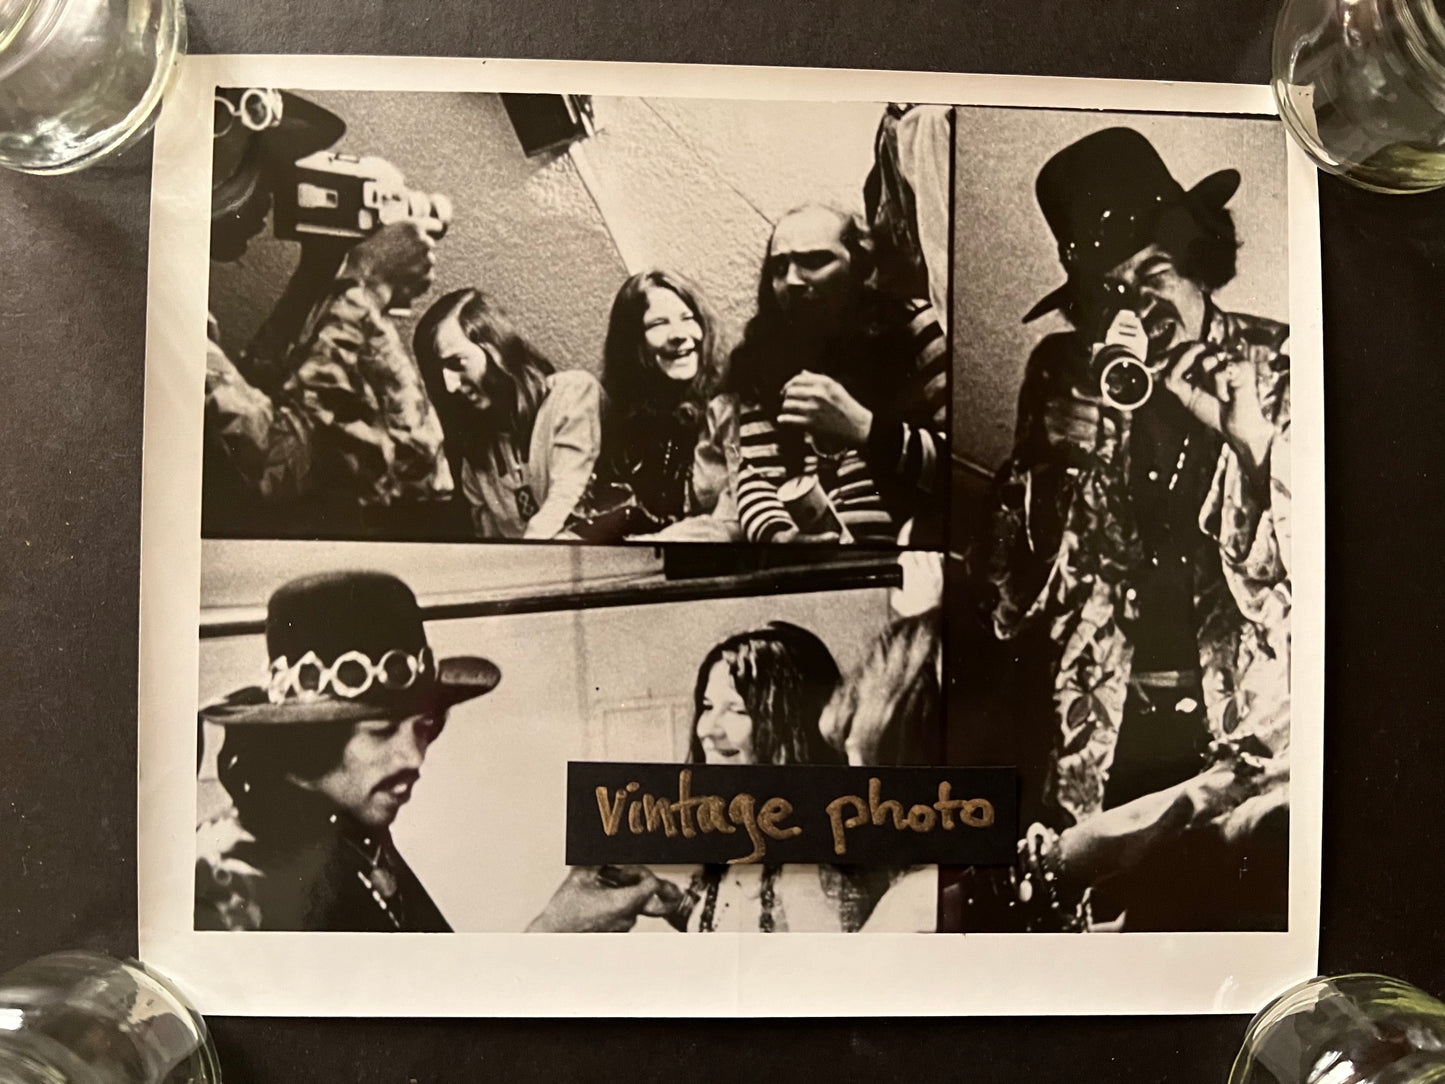 Jimi Hendrix, Janis Joplin - Original Vintage Photo Collage - Unknown Photographer